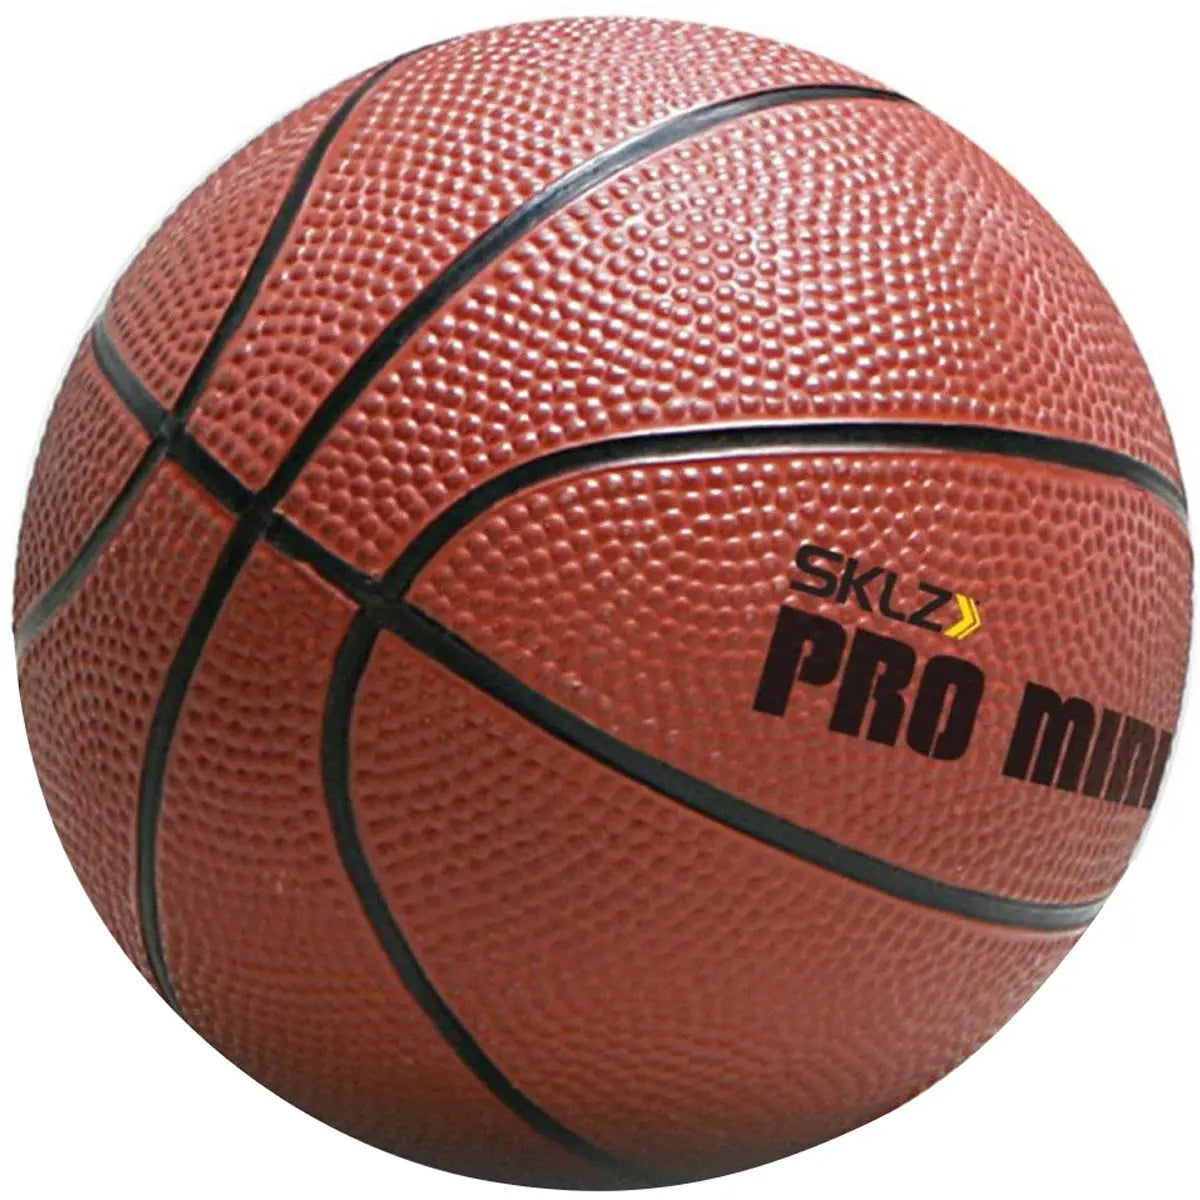 SKLZ Pro Mini Basketball Hoop System Replacement Ball SKLZ